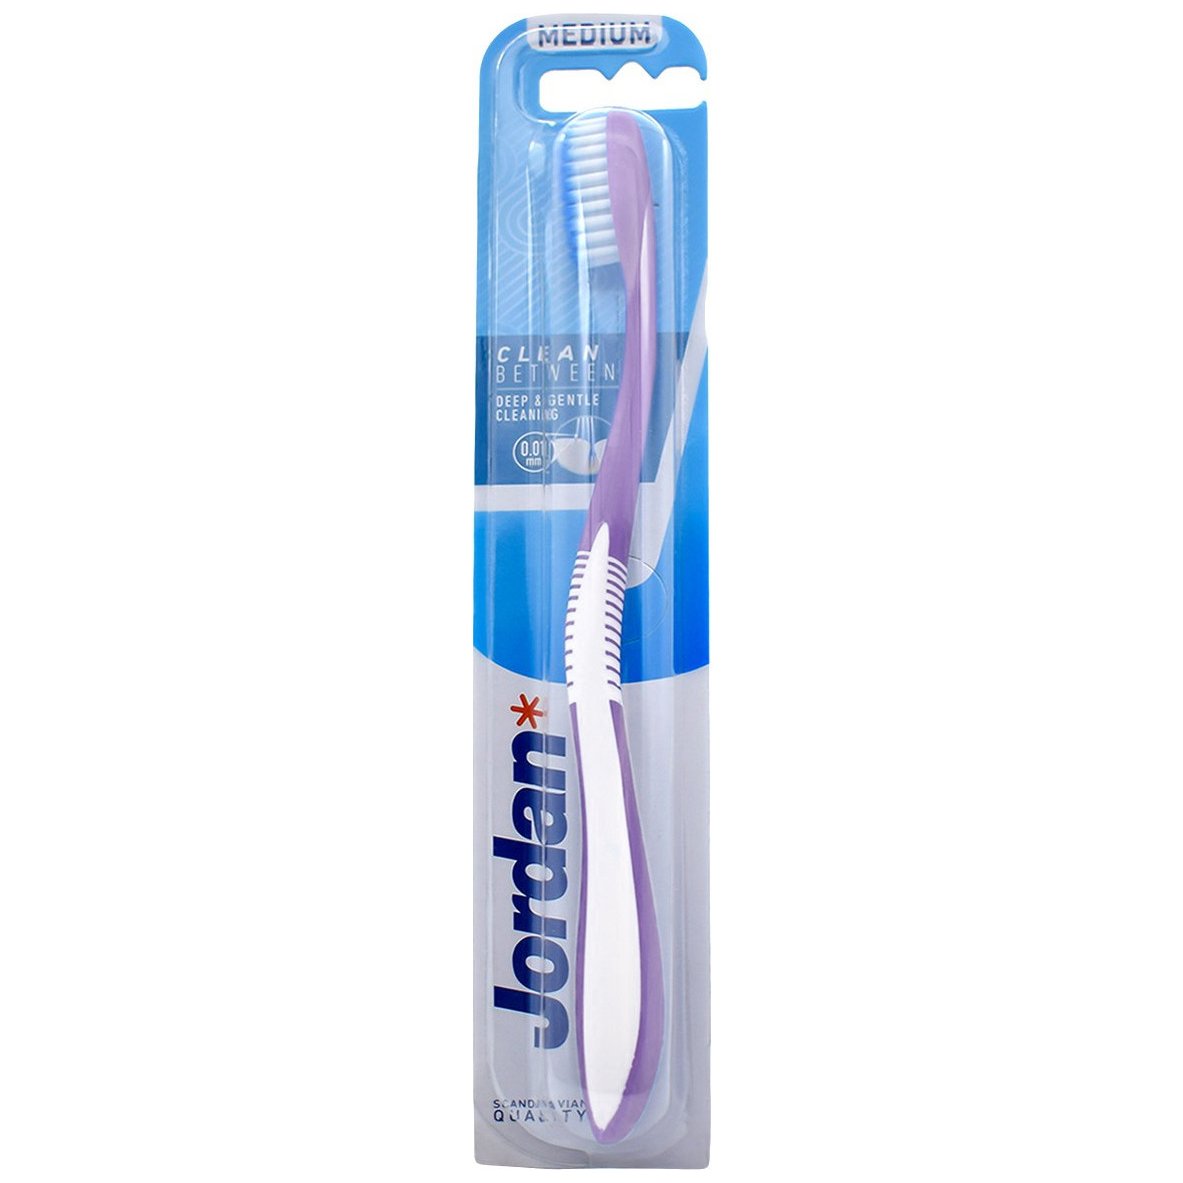 Jordan Clean Between Toothbrush Medium 0.01mm Μέτρια Οδοντόβουρτσα για Βαθύ Καθαρισμό με Εξαιρετικά Λεπτές Ίνες 1 Τεμάχιο, Κωδ 310035 – Μωβ